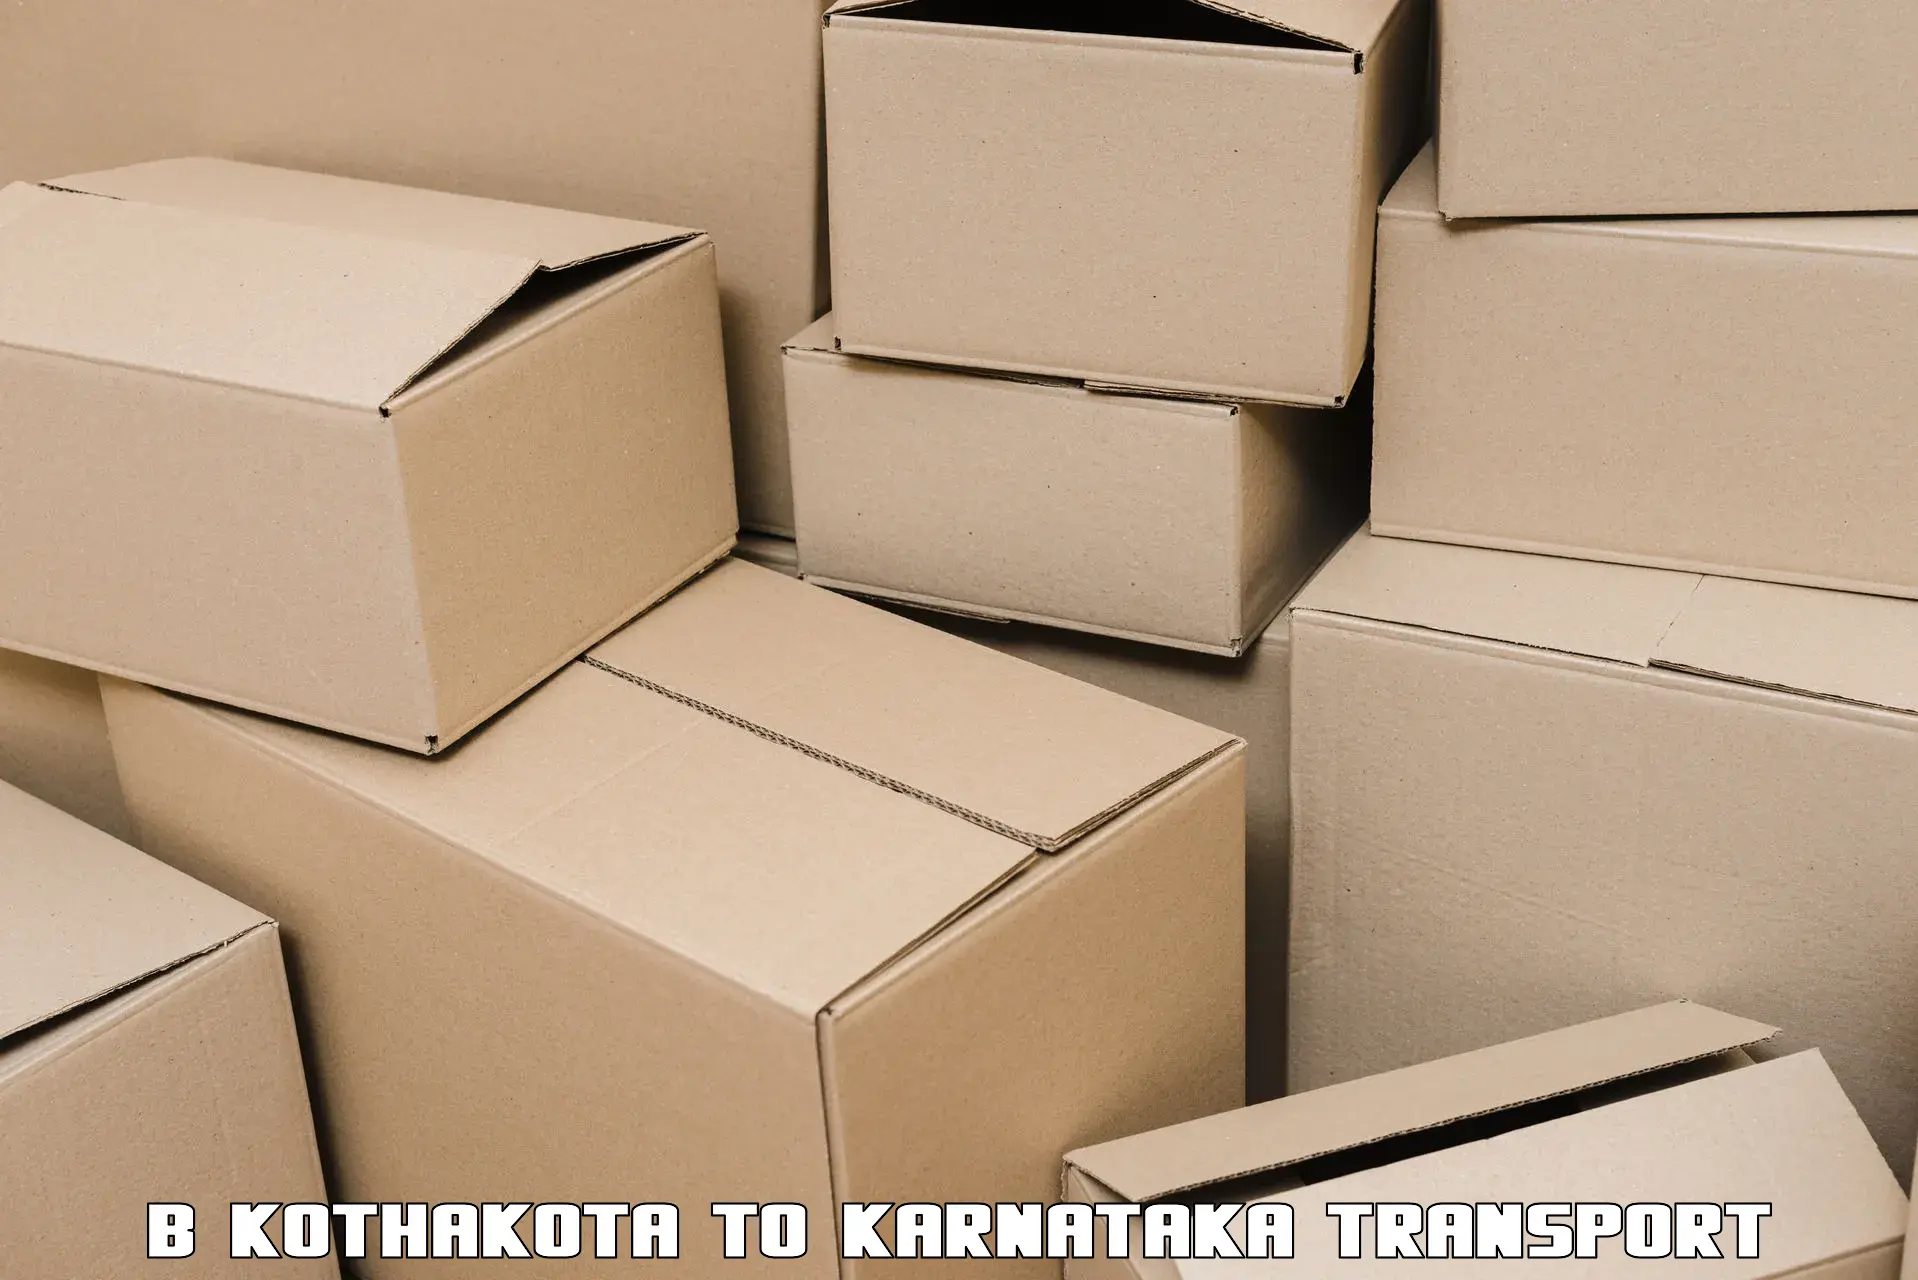 Container transport service B Kothakota to Byadagi